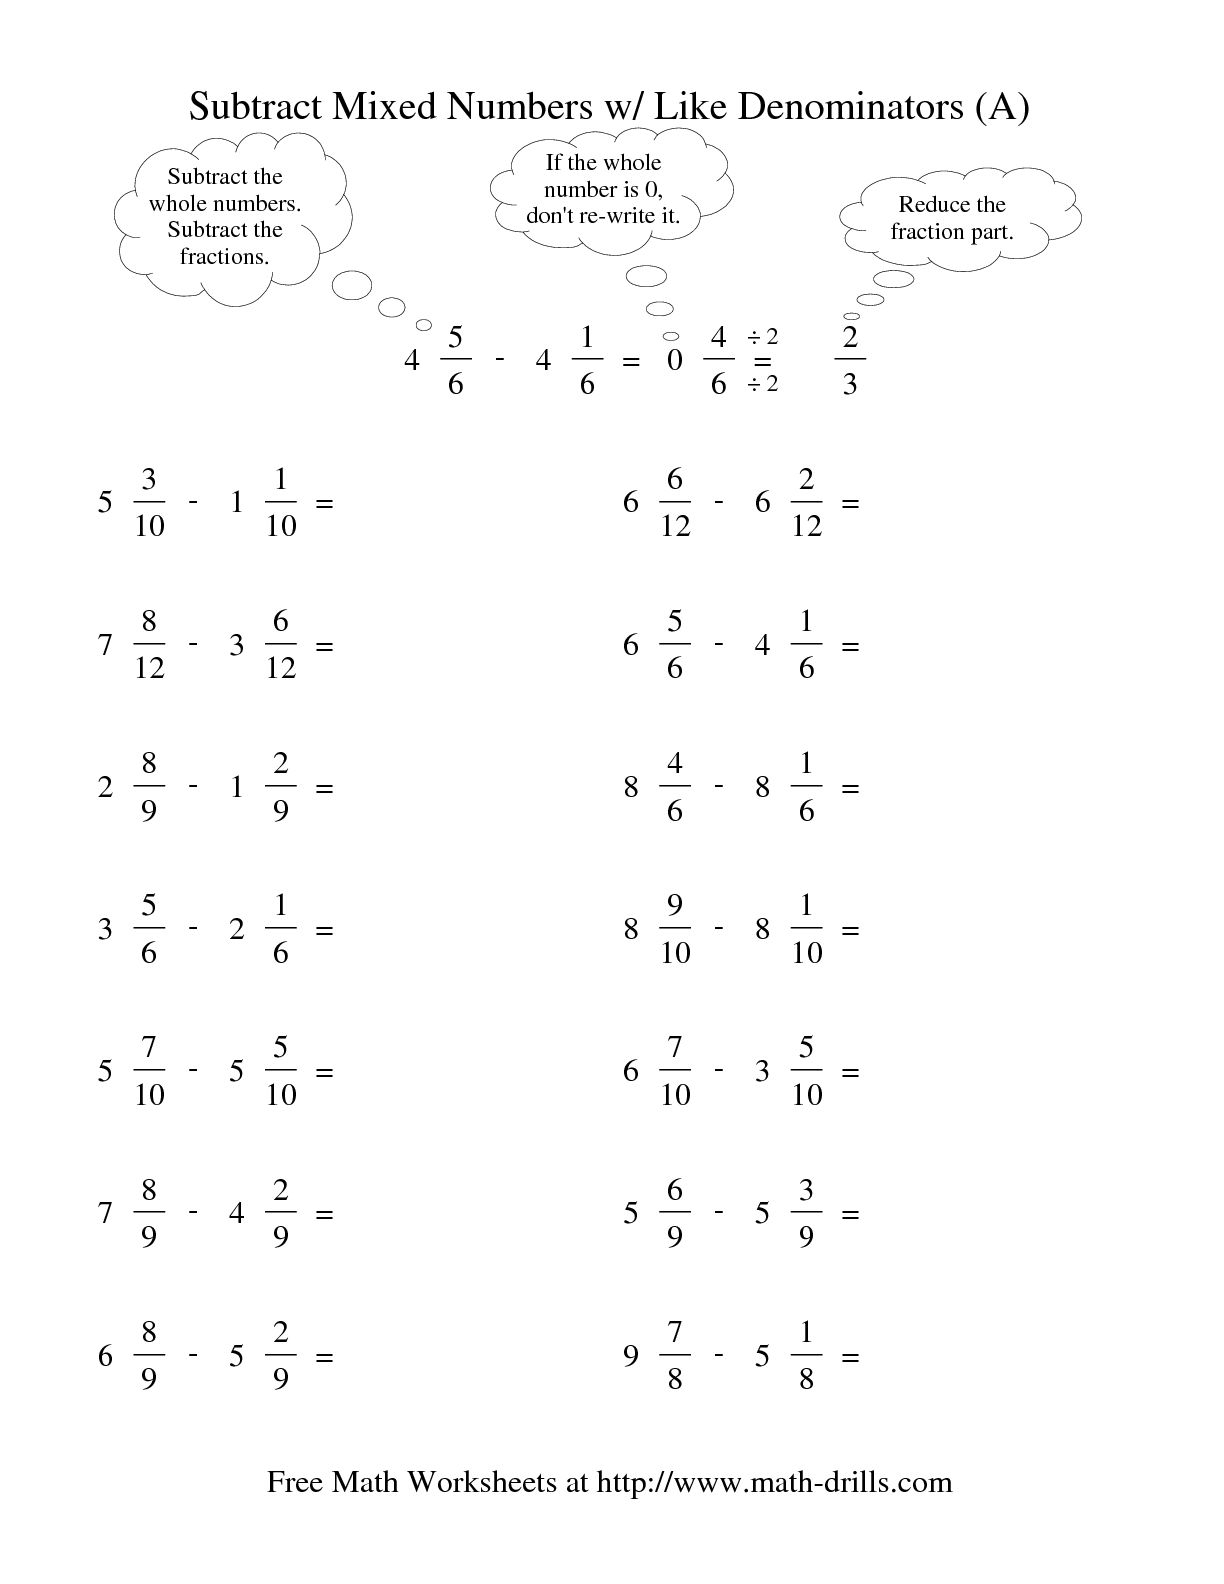 convert-mixed-number-to-improper-fraction-worksheet-pdf